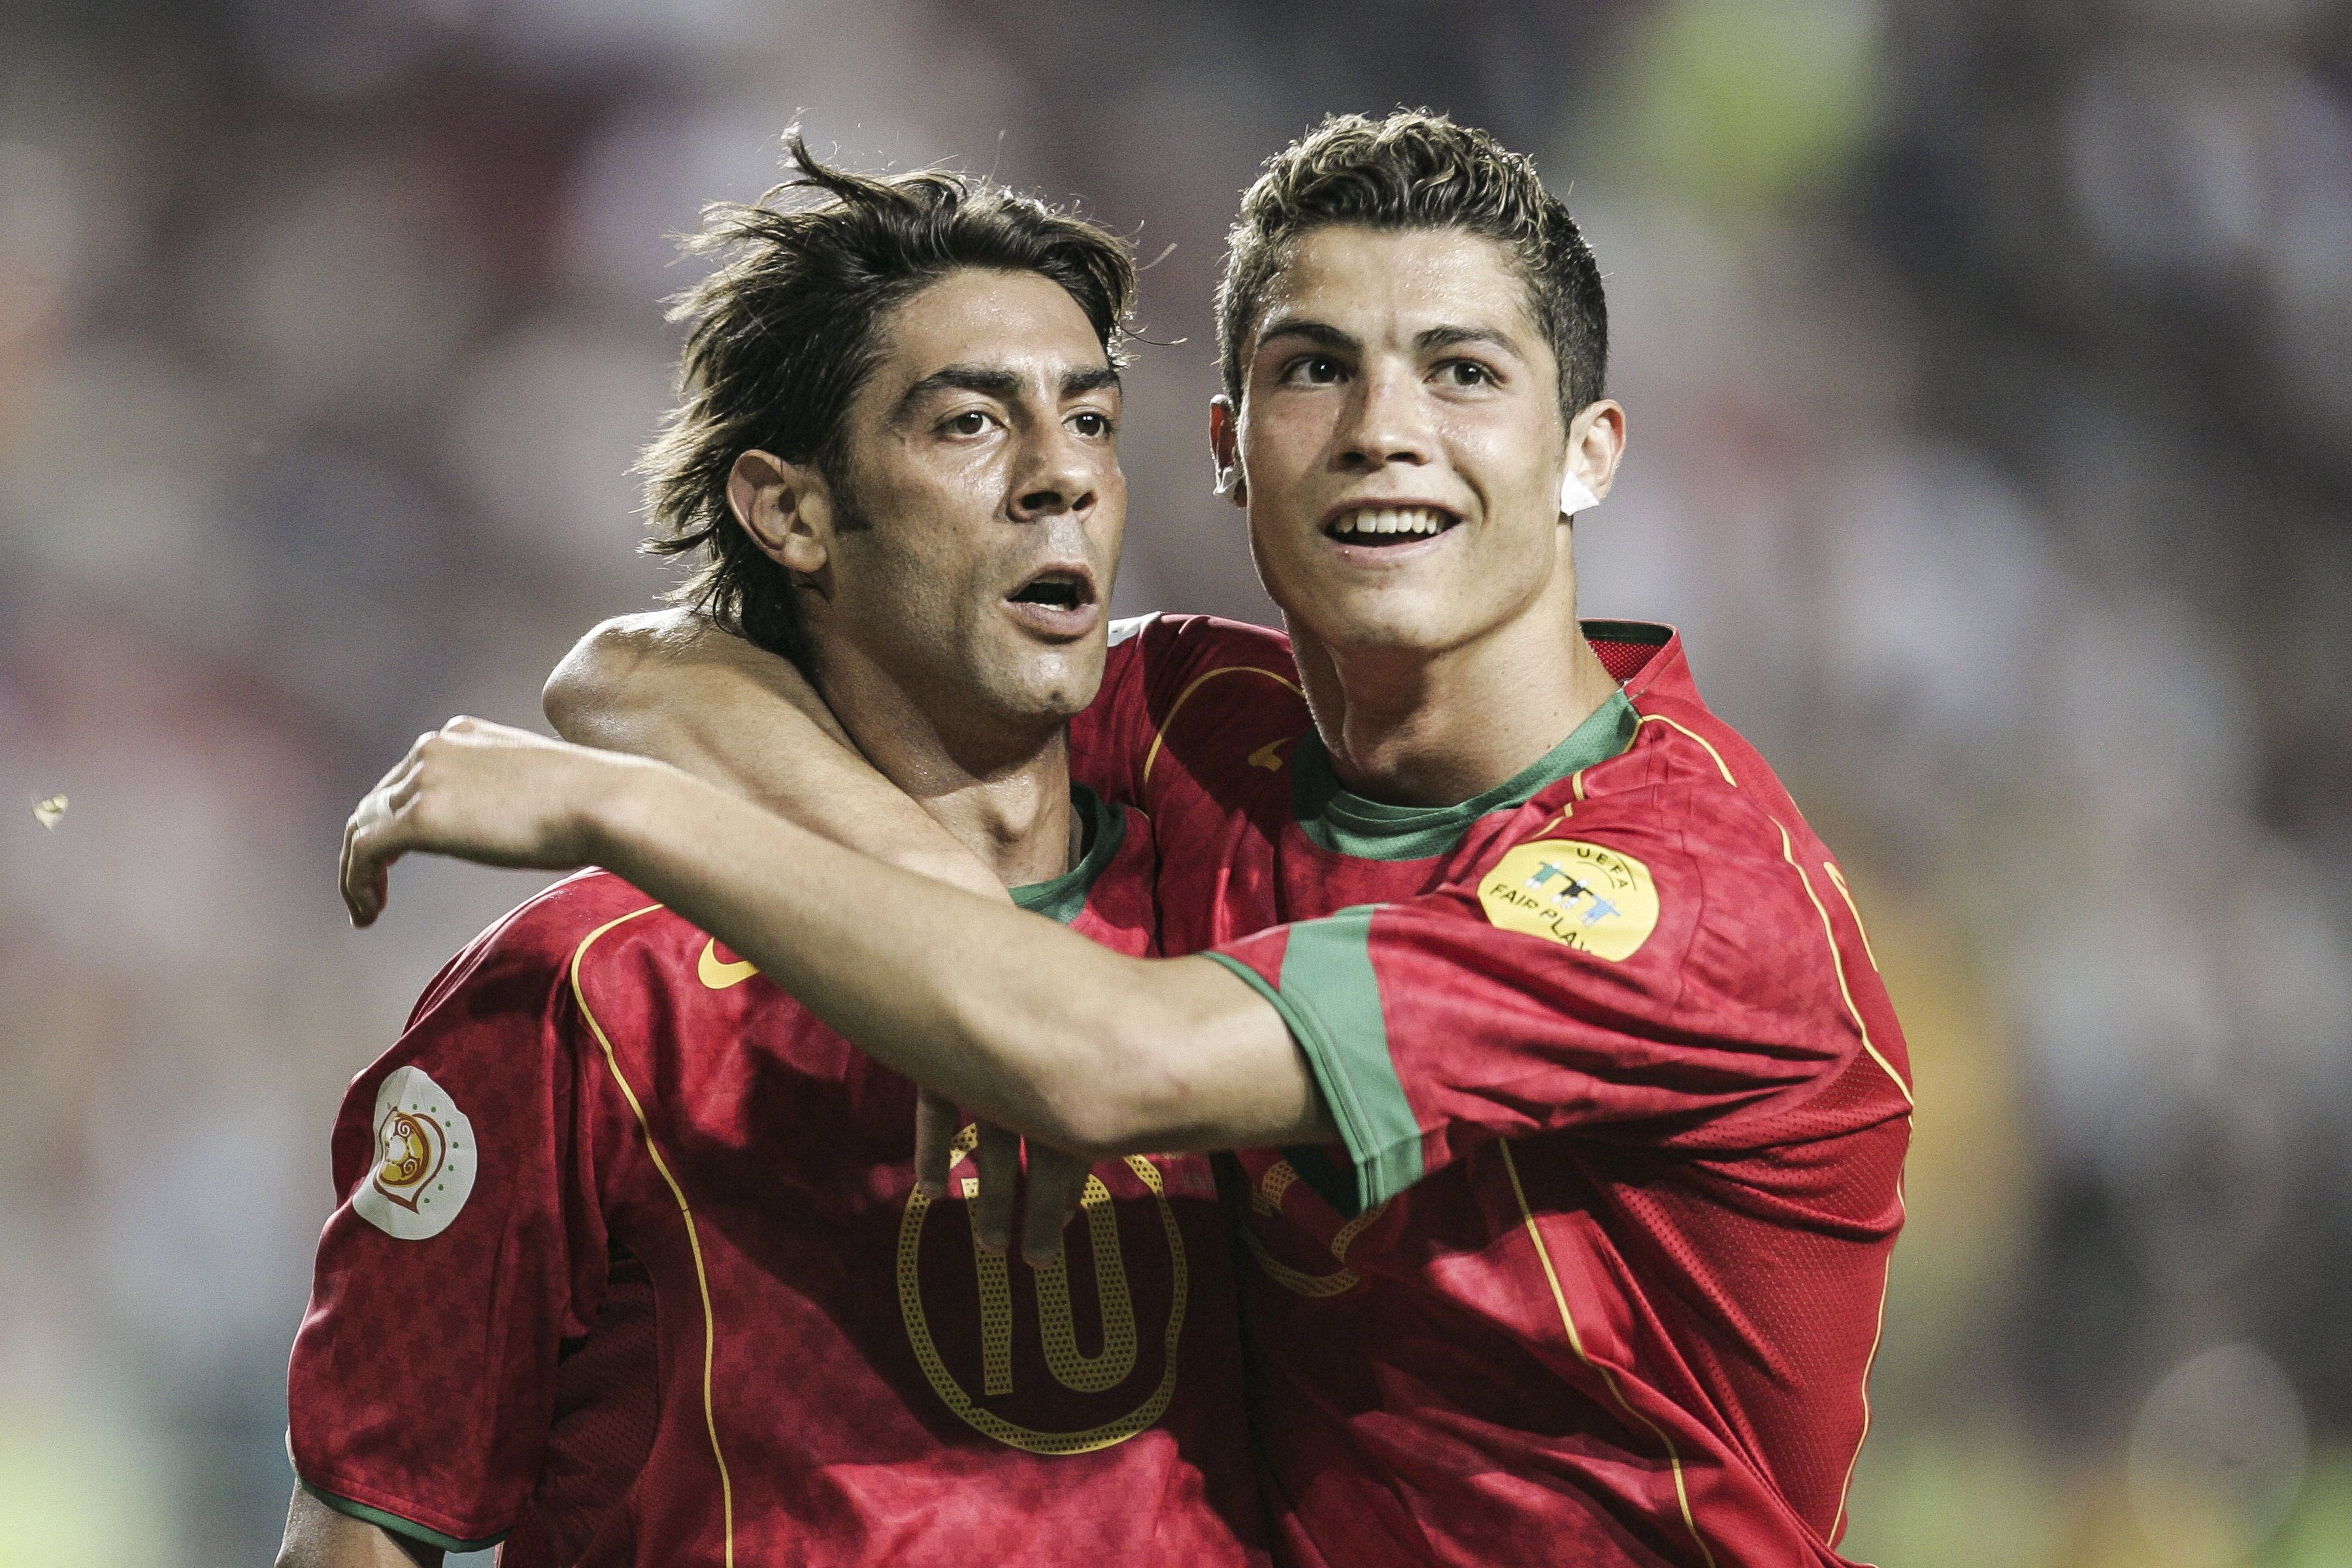 Manuel Rui Costa & Cristiano Ronaldo. ロナウド, クリスティアーノロナウド